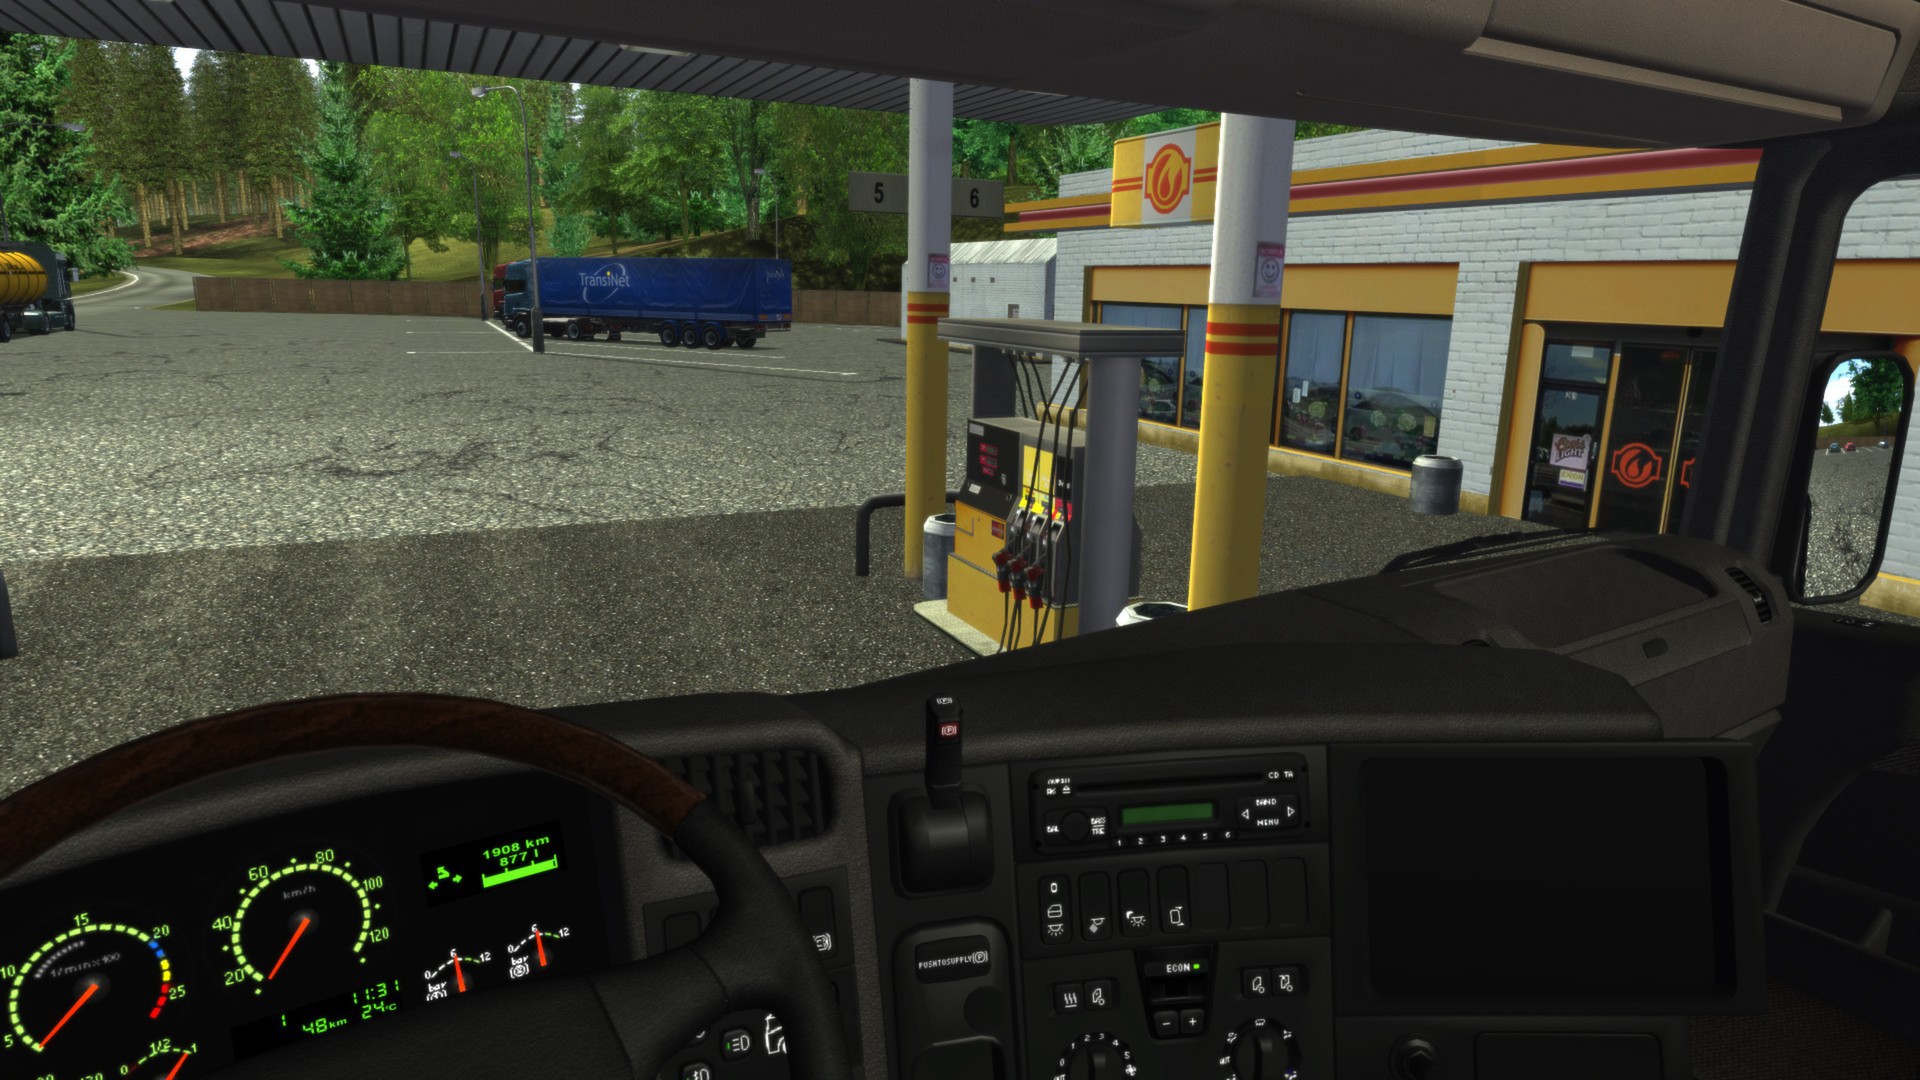 Euro truck simulator pc game download free